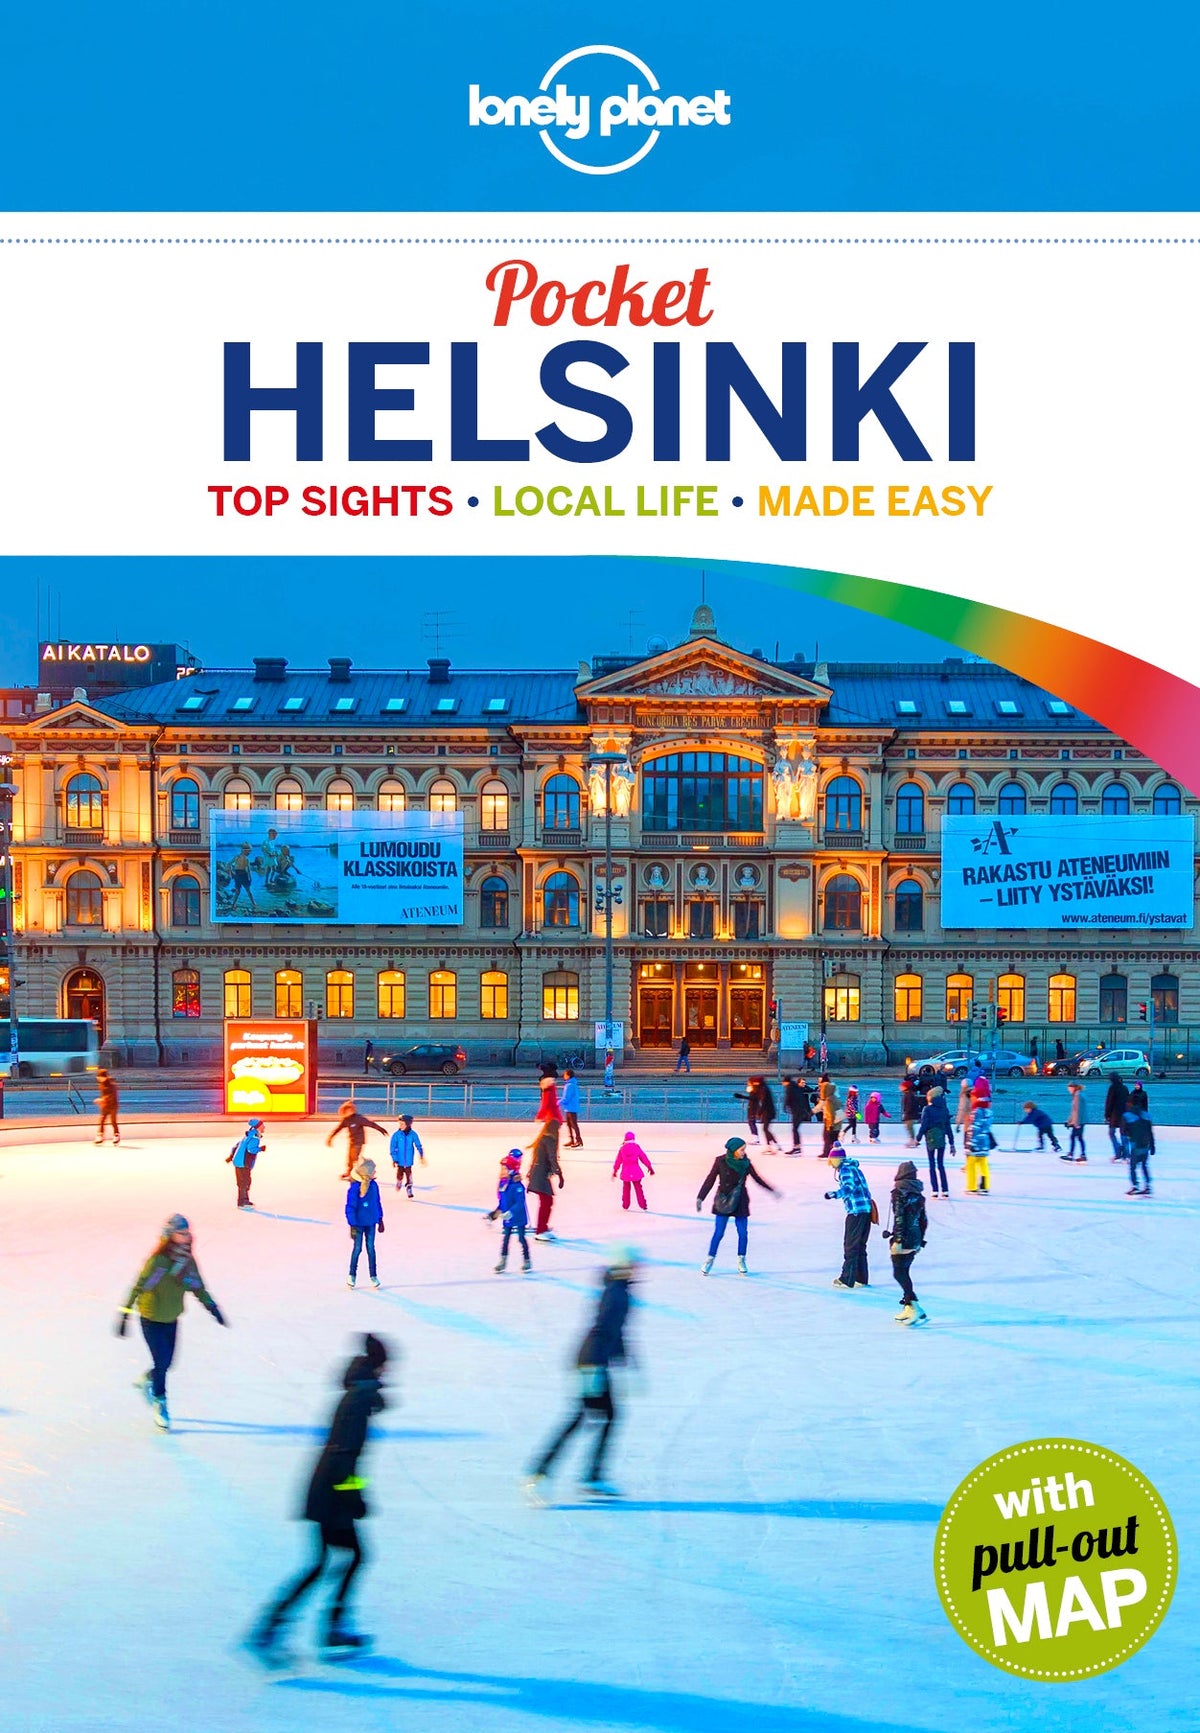 Pocket Helsinki Travel Guide